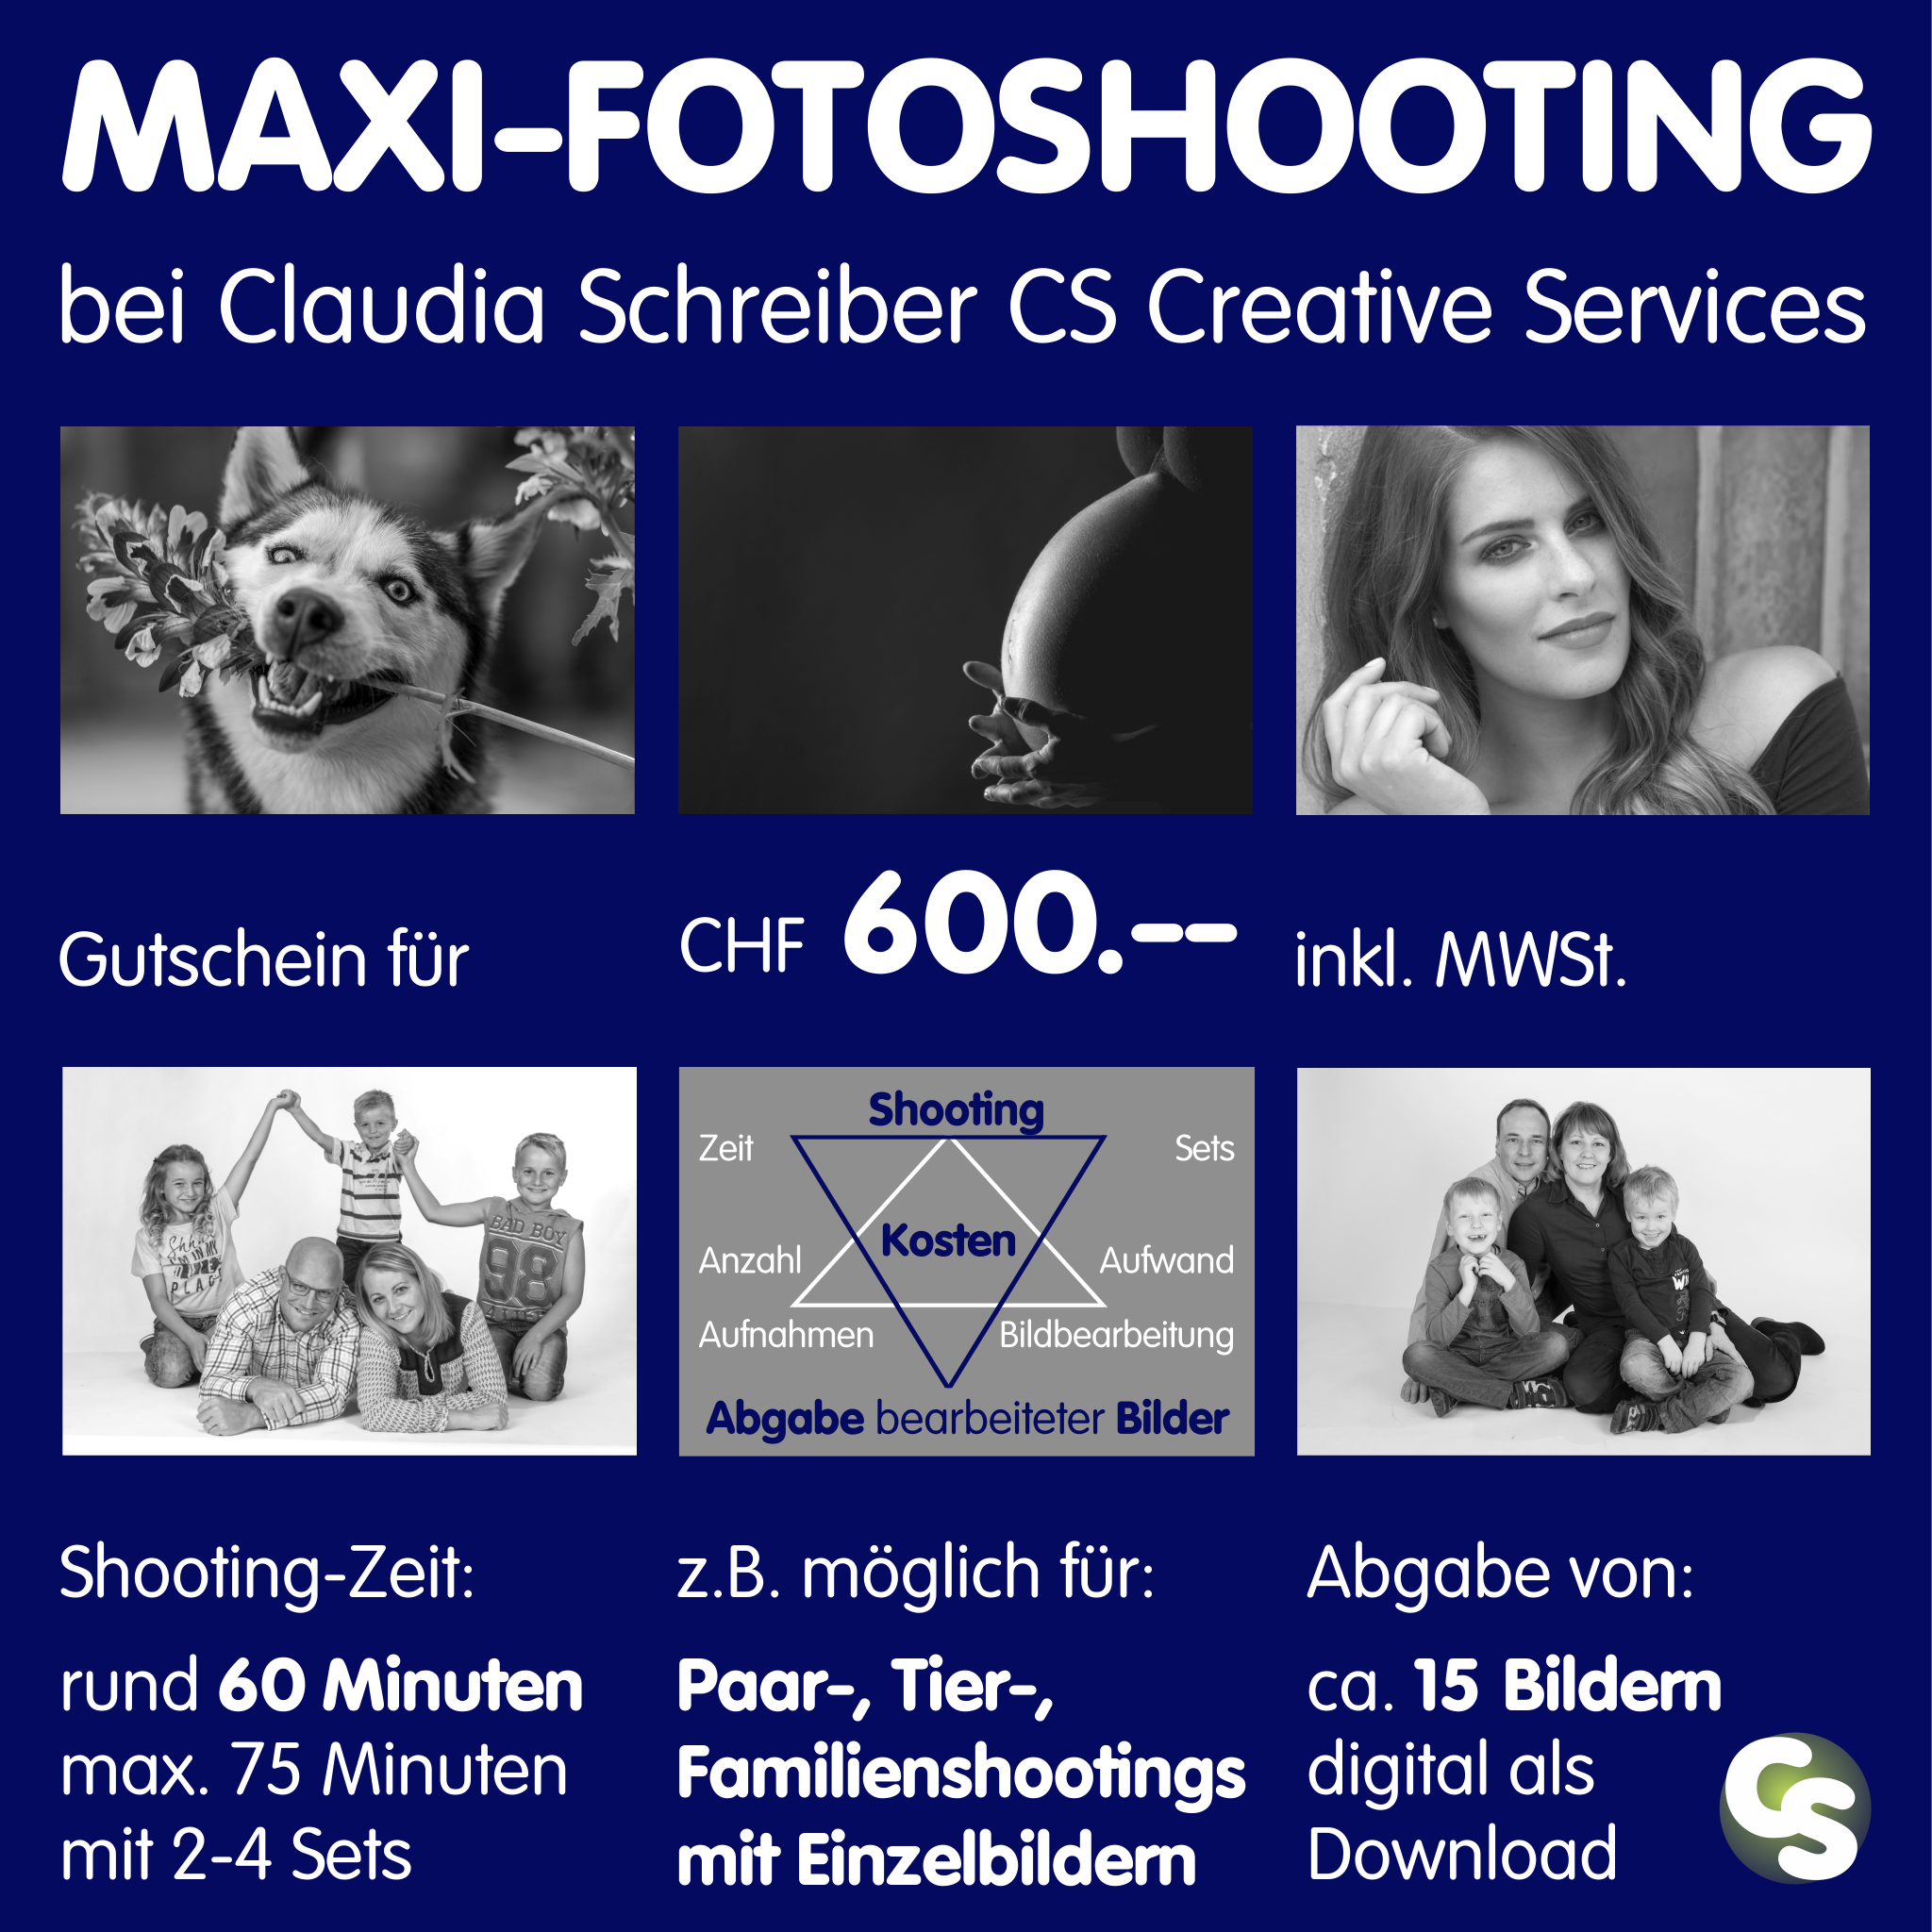 MAXI-FOTOSHOOTING